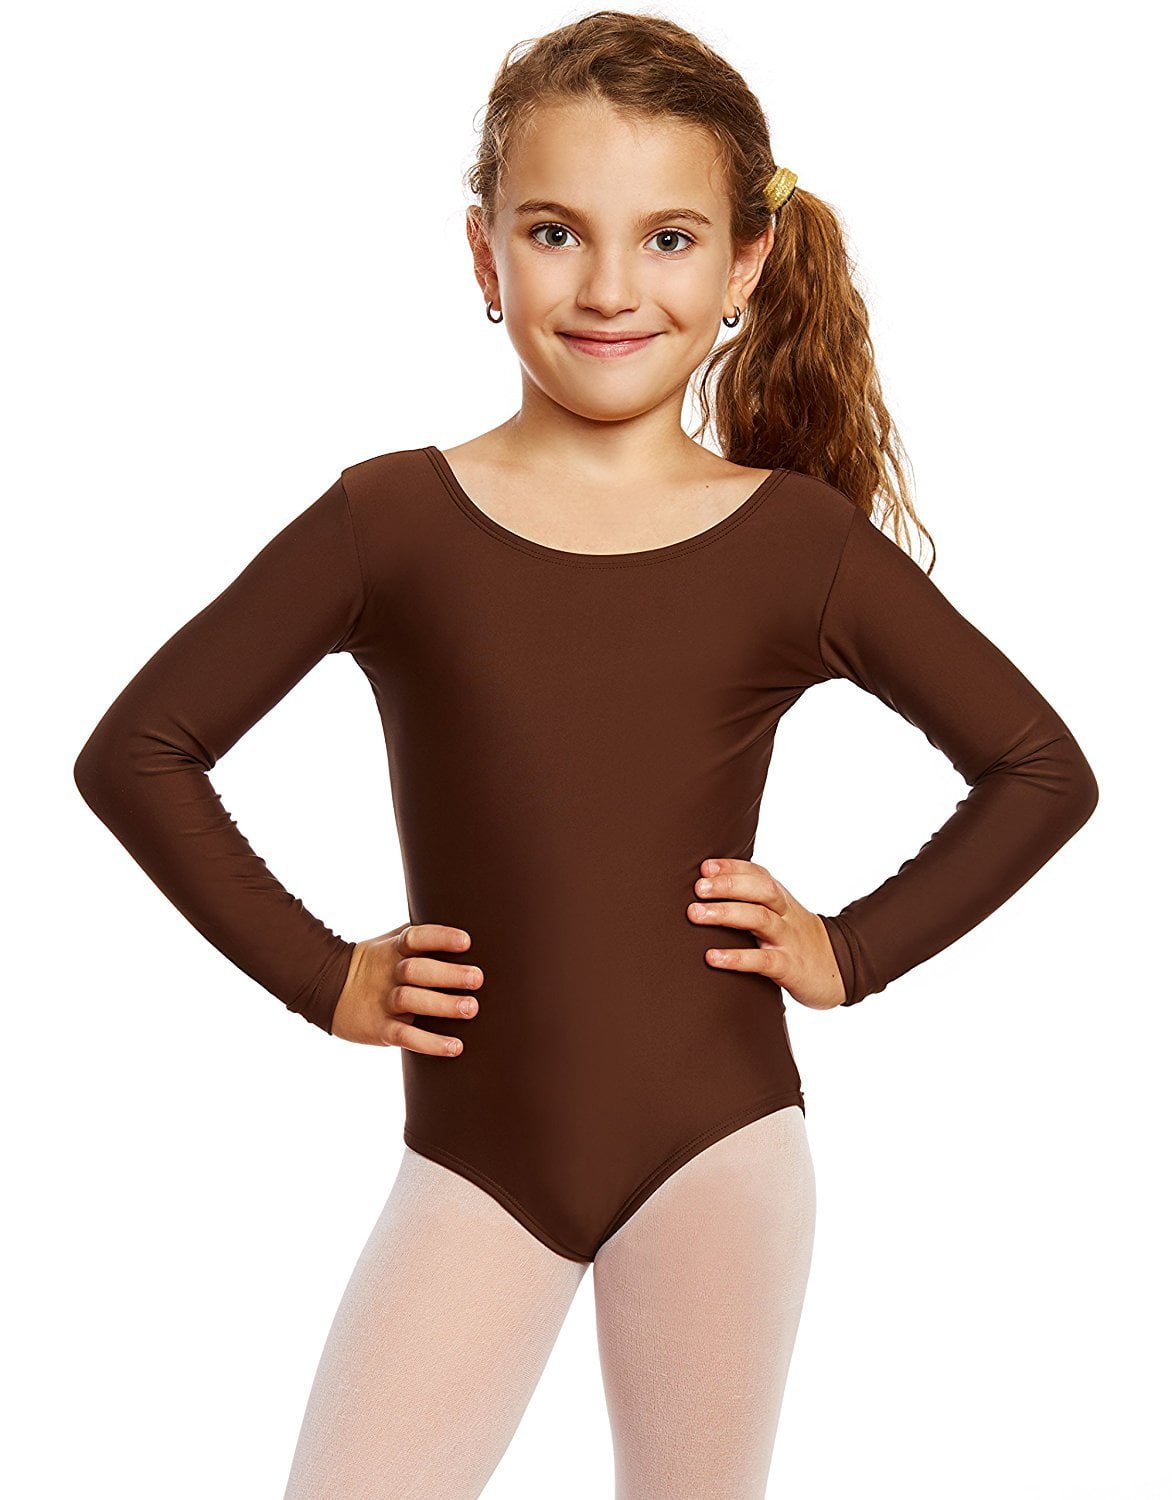 New Girls Uniform Leotard Dance Gymnastics Ballet Long Sleeve Leotards Kids 